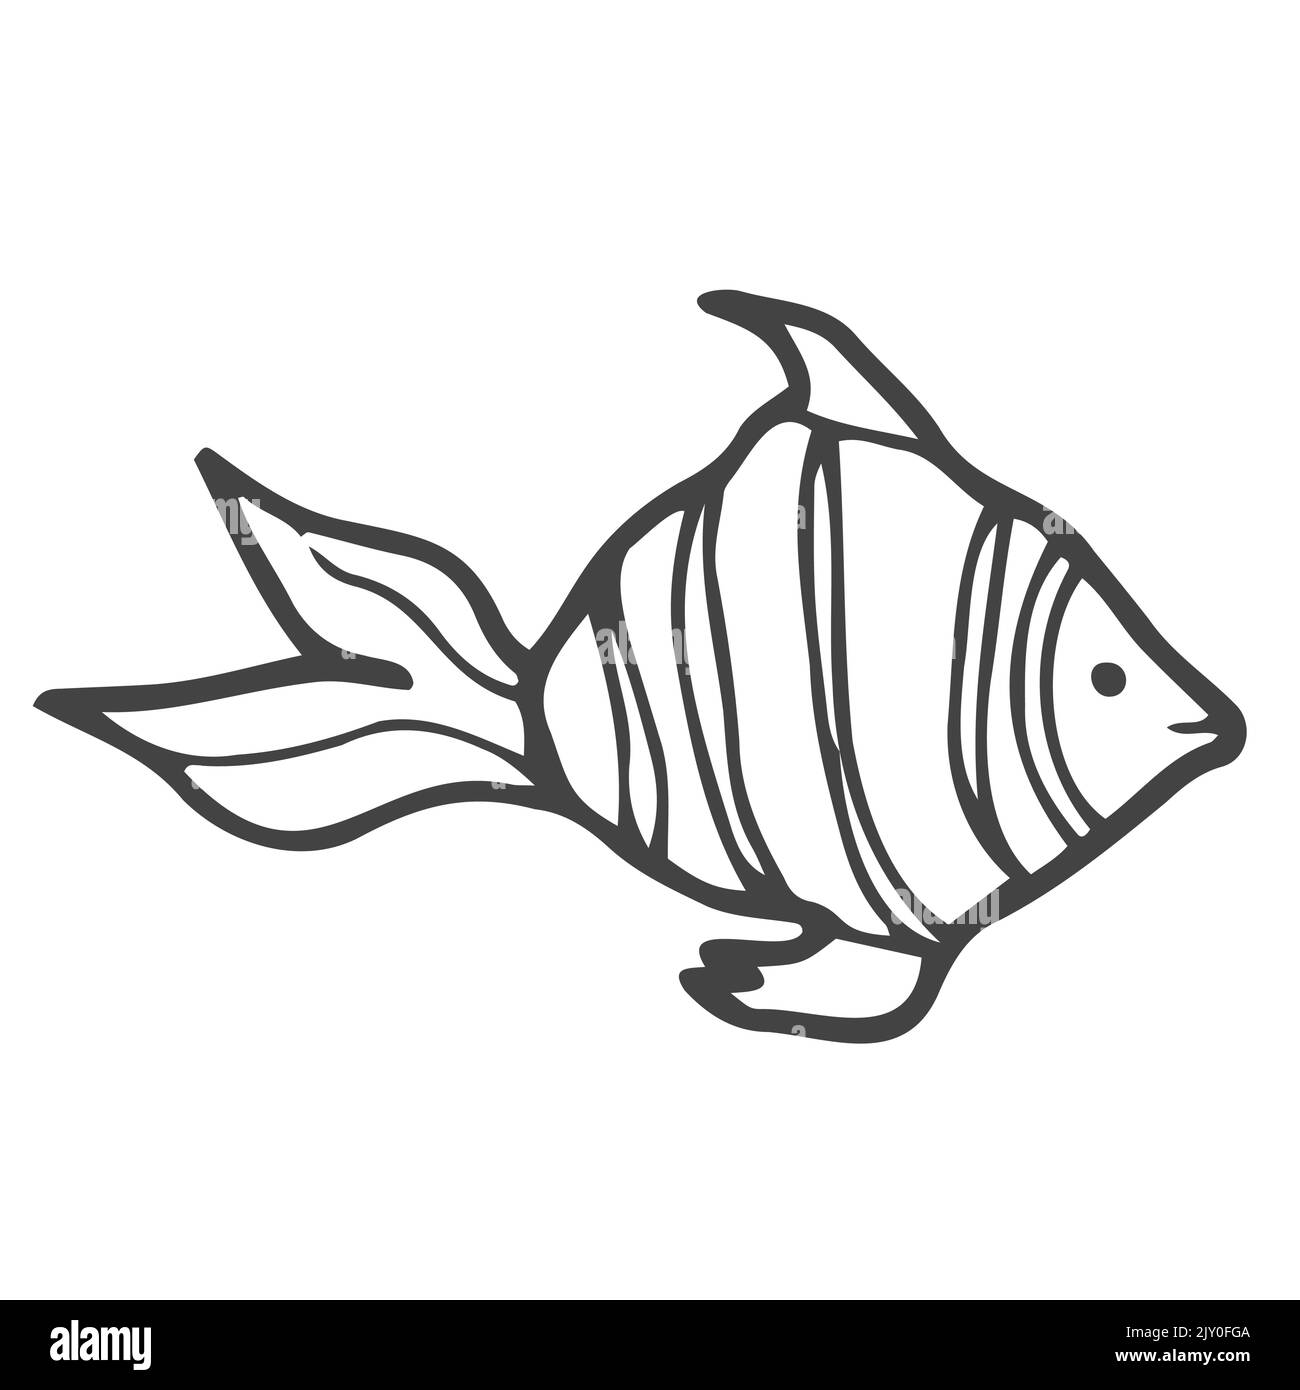 Joli dessin vectoriel de poissons. Illustration décorative de poissons exotiques. Illustration de Vecteur